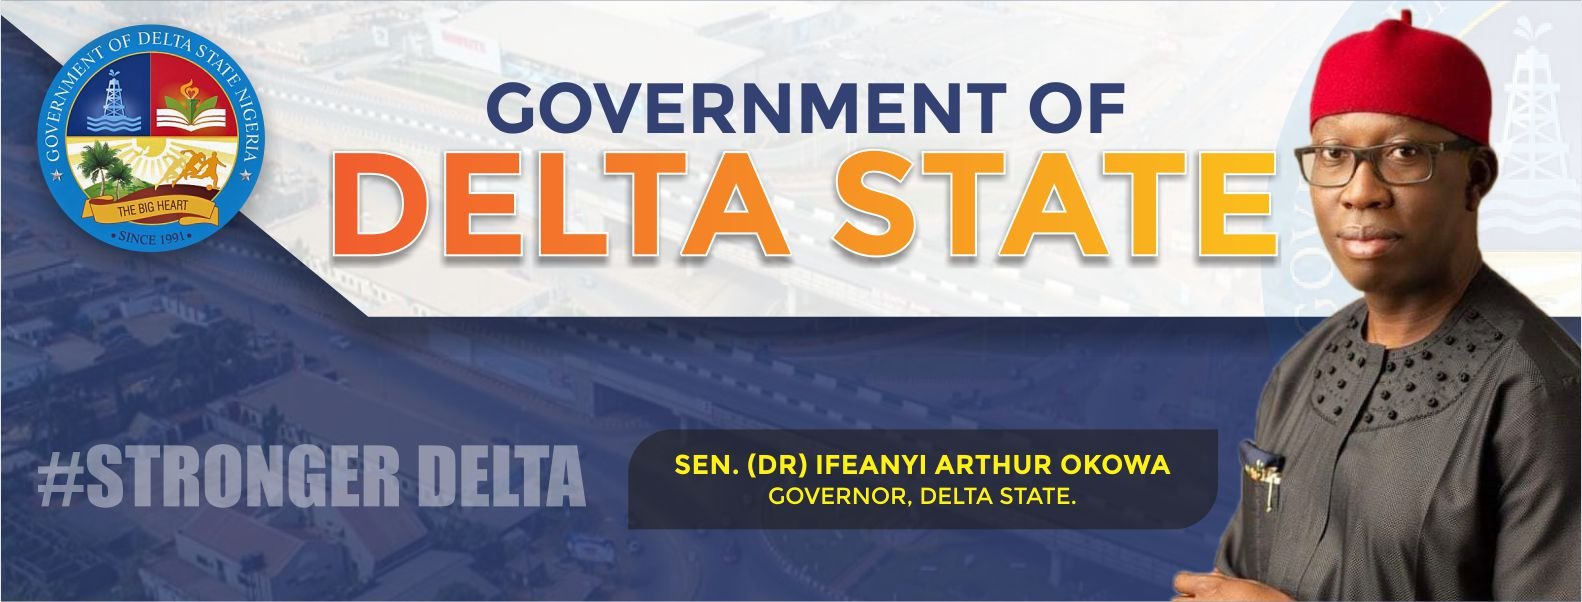 delta state government